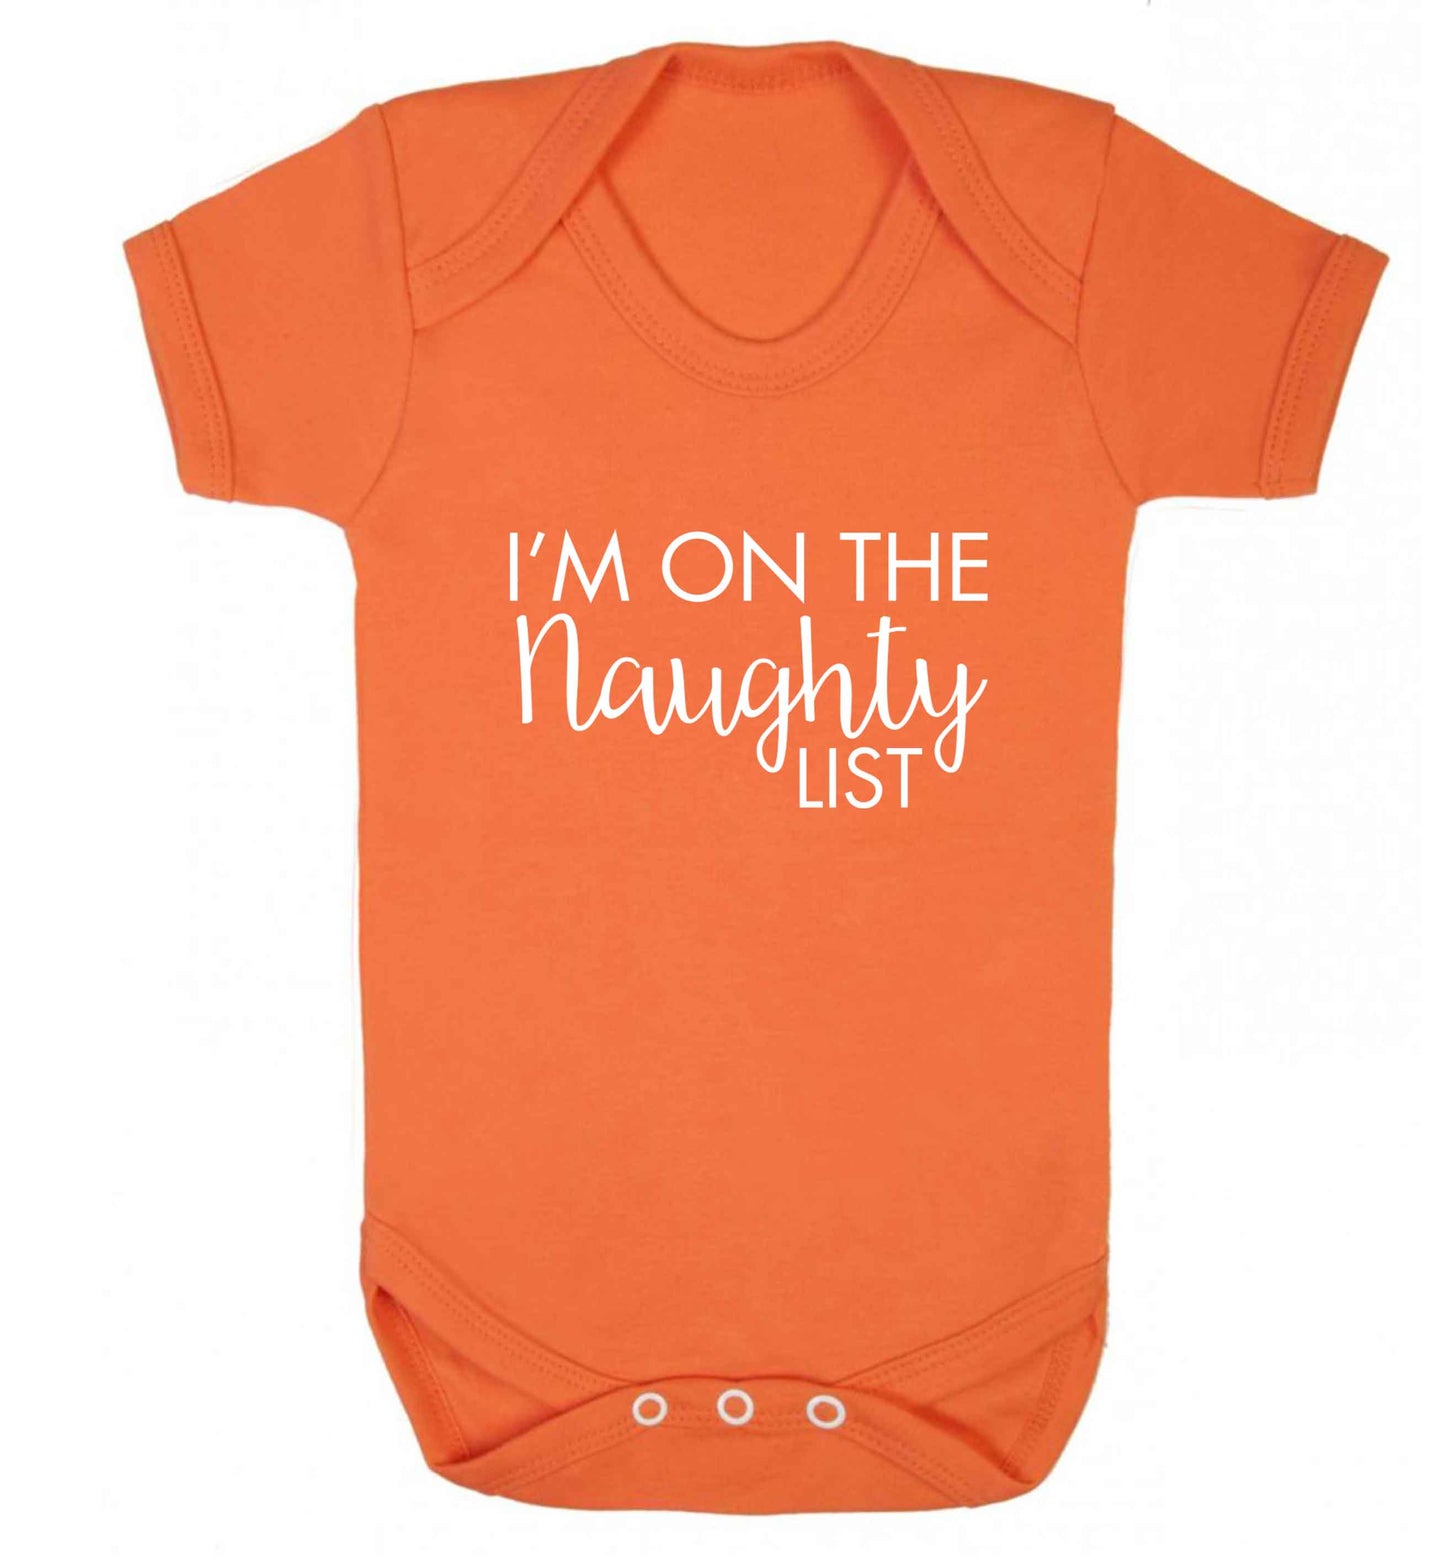 I'm on the naughty list baby vest orange 18-24 months